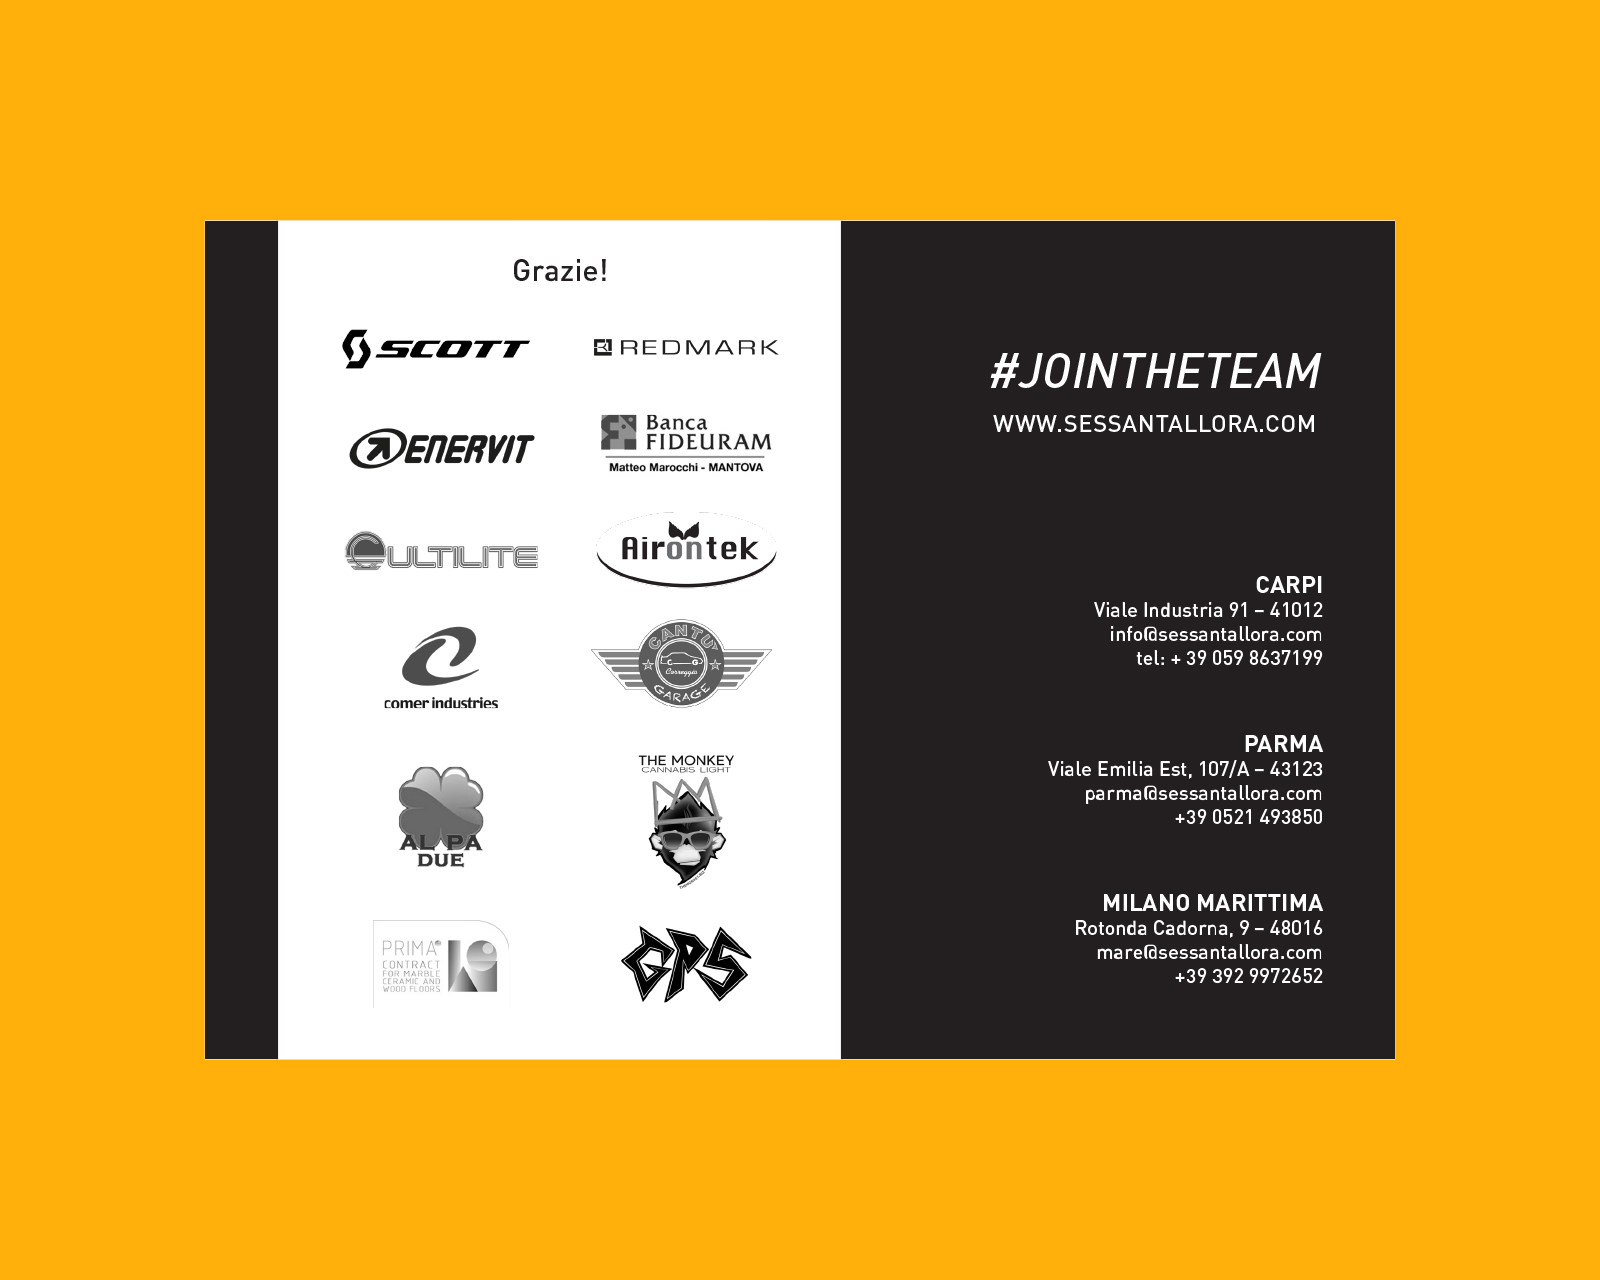 Graphic Desing - Brochure Team Sessantallora 2020